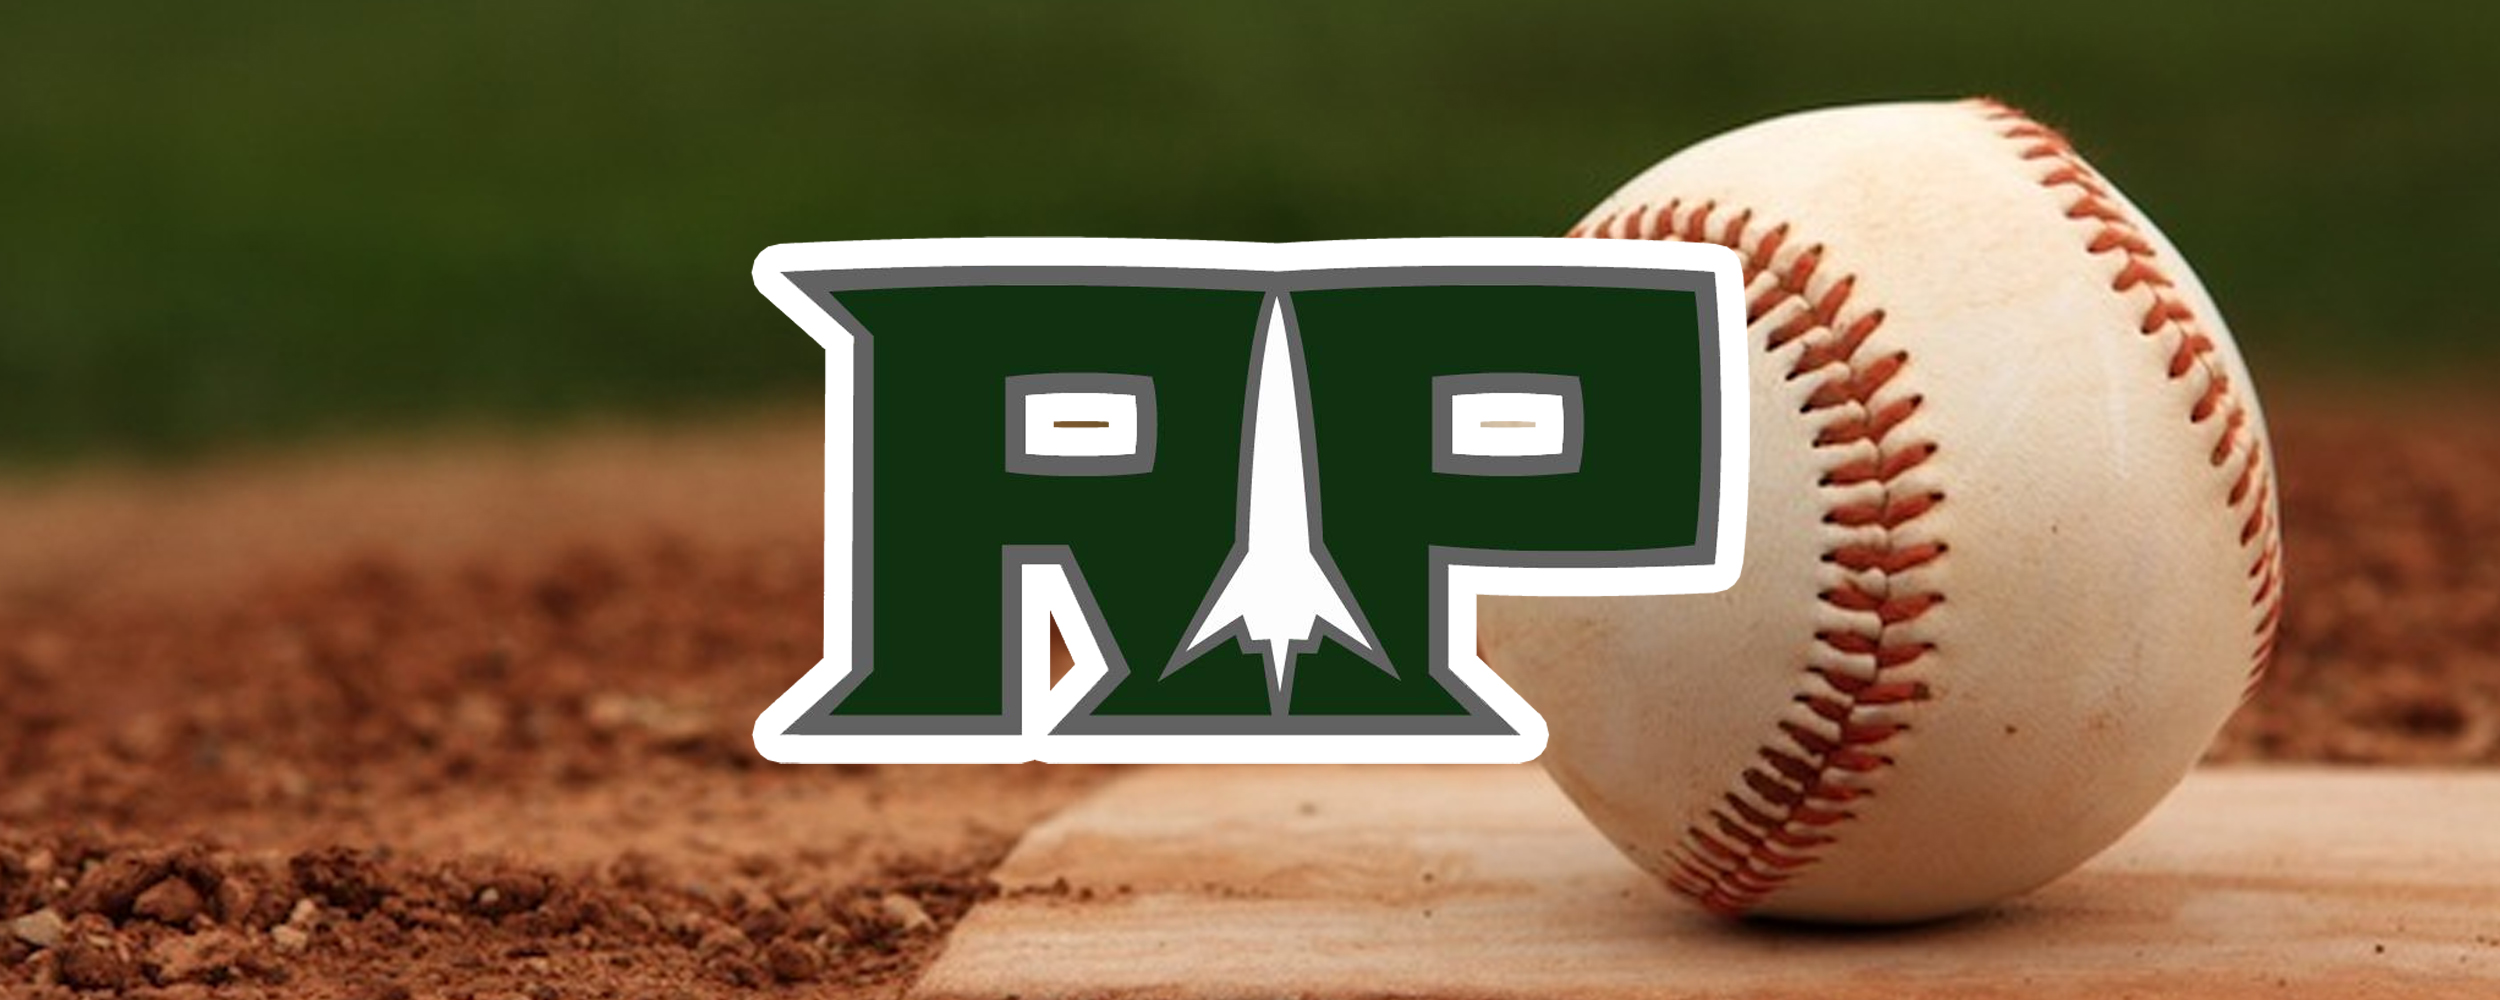 Reeths-Puffer earns baseball sweep of Grand Rapids Union in three-game weeklong series